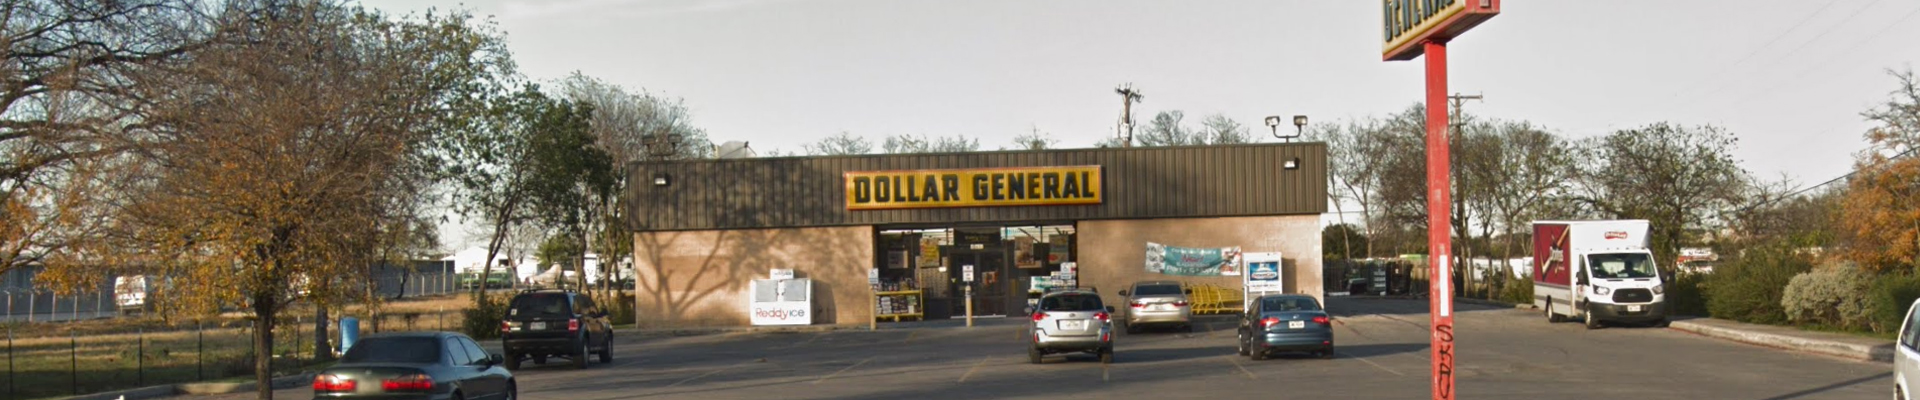 Dollar General (9846) – San Antonio, Texas